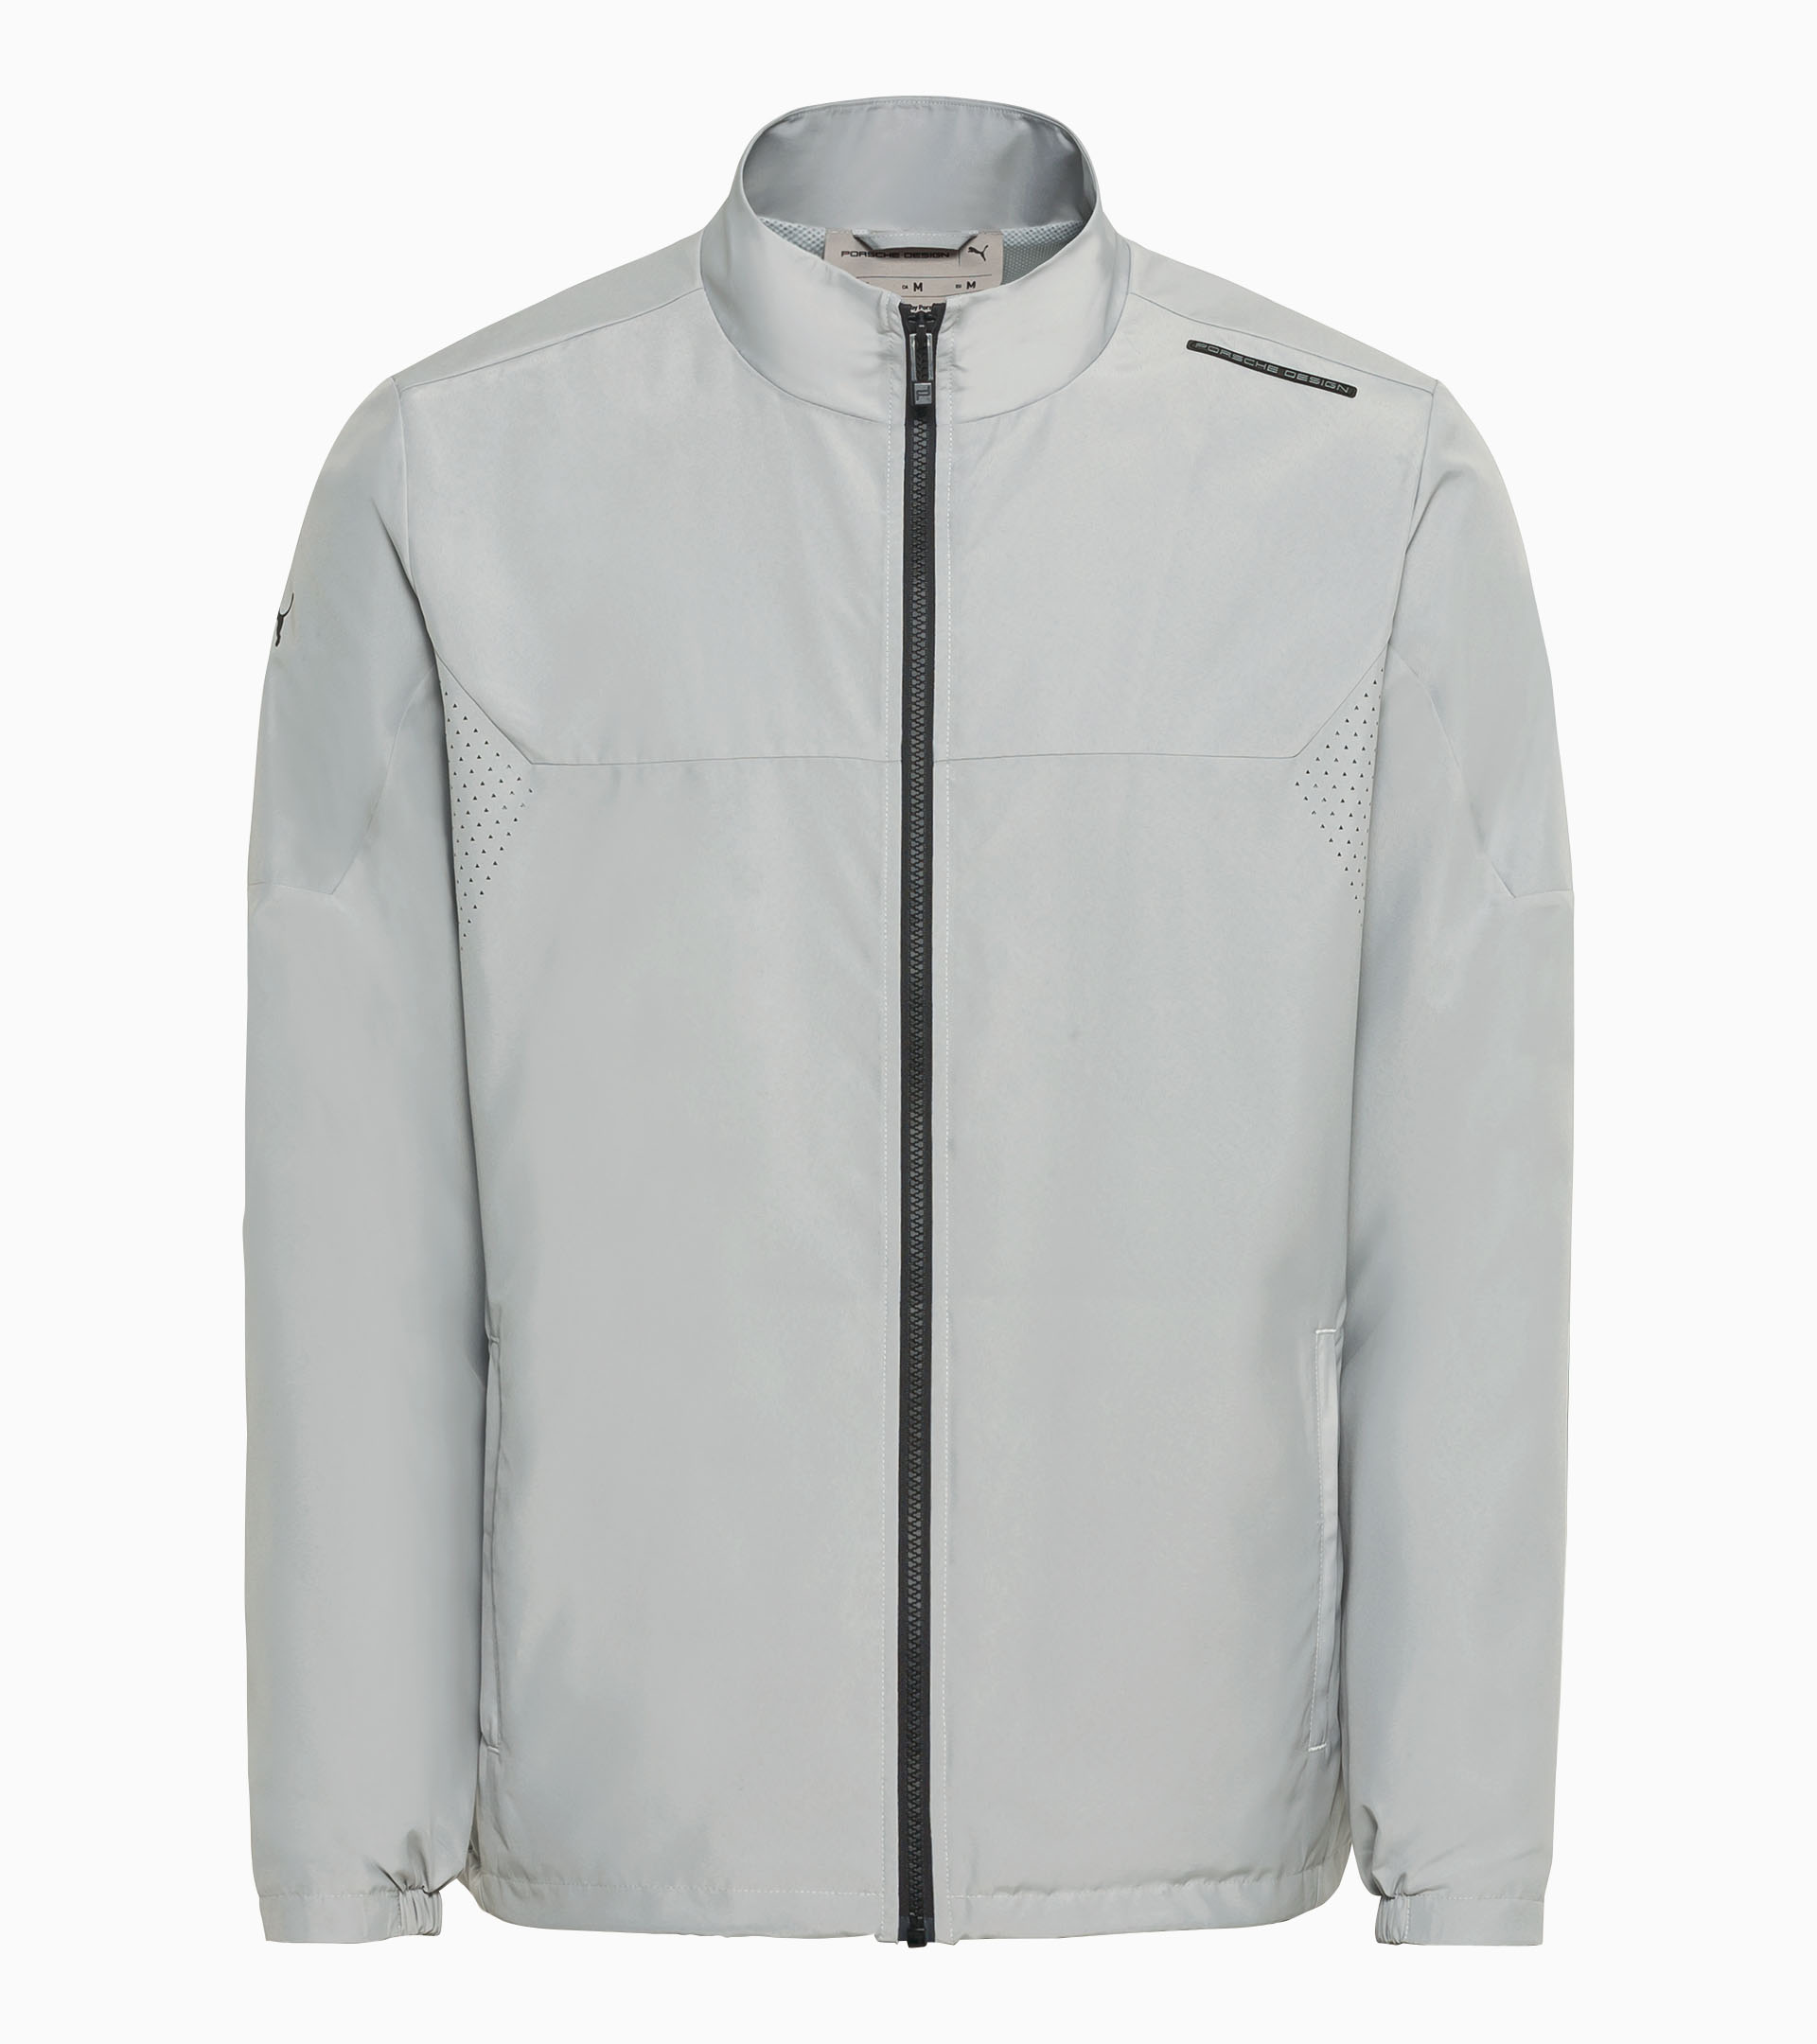 Woven tech jacket - Luxury Functional Jackets for Men | Porsche Design ...